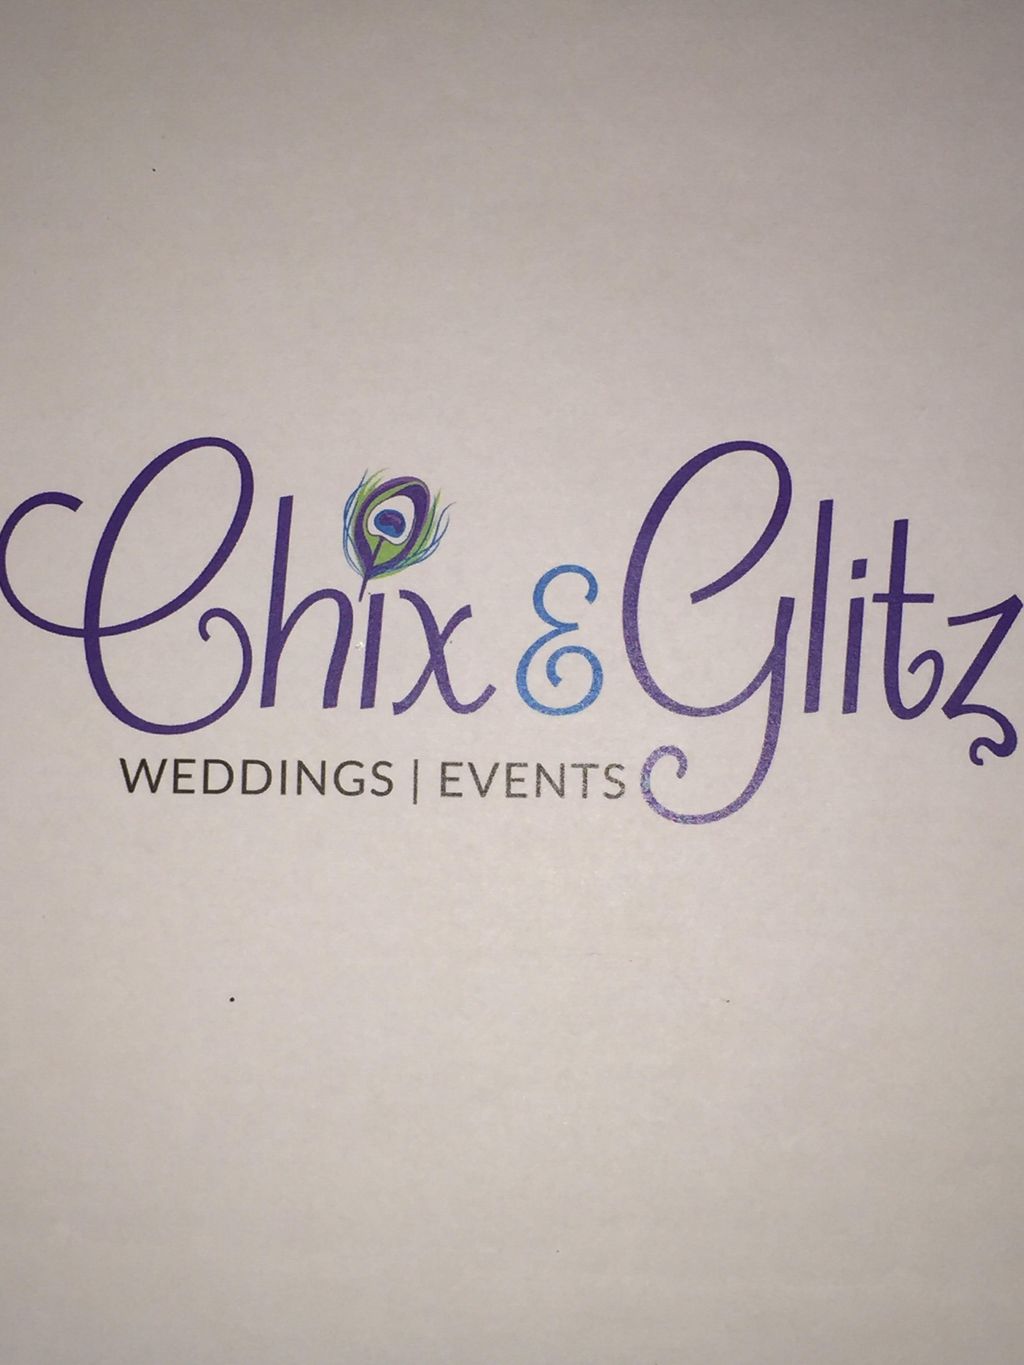 Chix & Glitz Weddings and Events